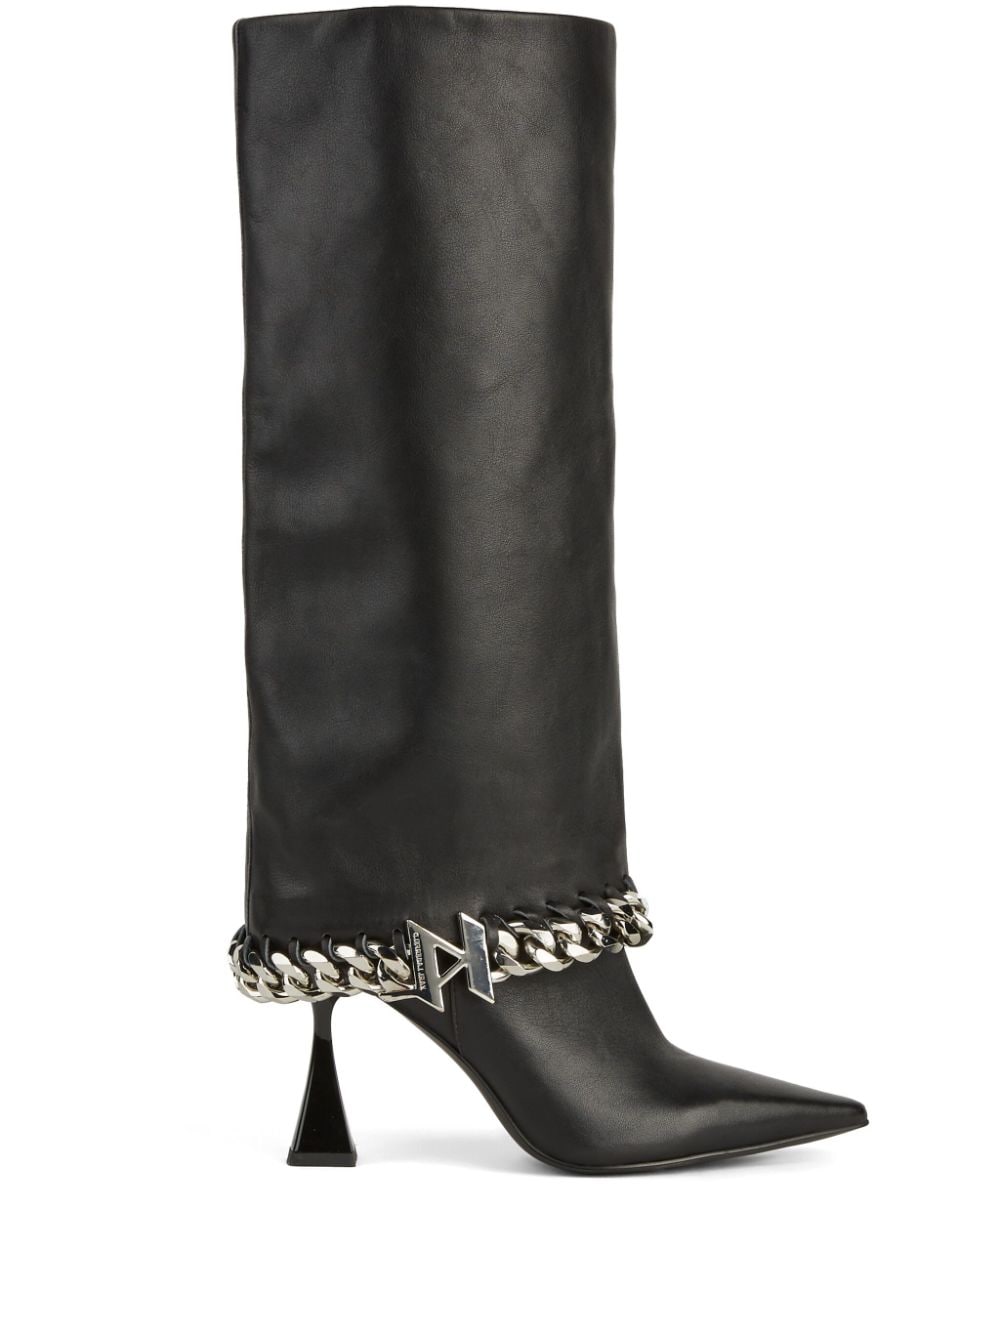 Karl Lagerfeld Debut 90mm leather boots - Black von Karl Lagerfeld